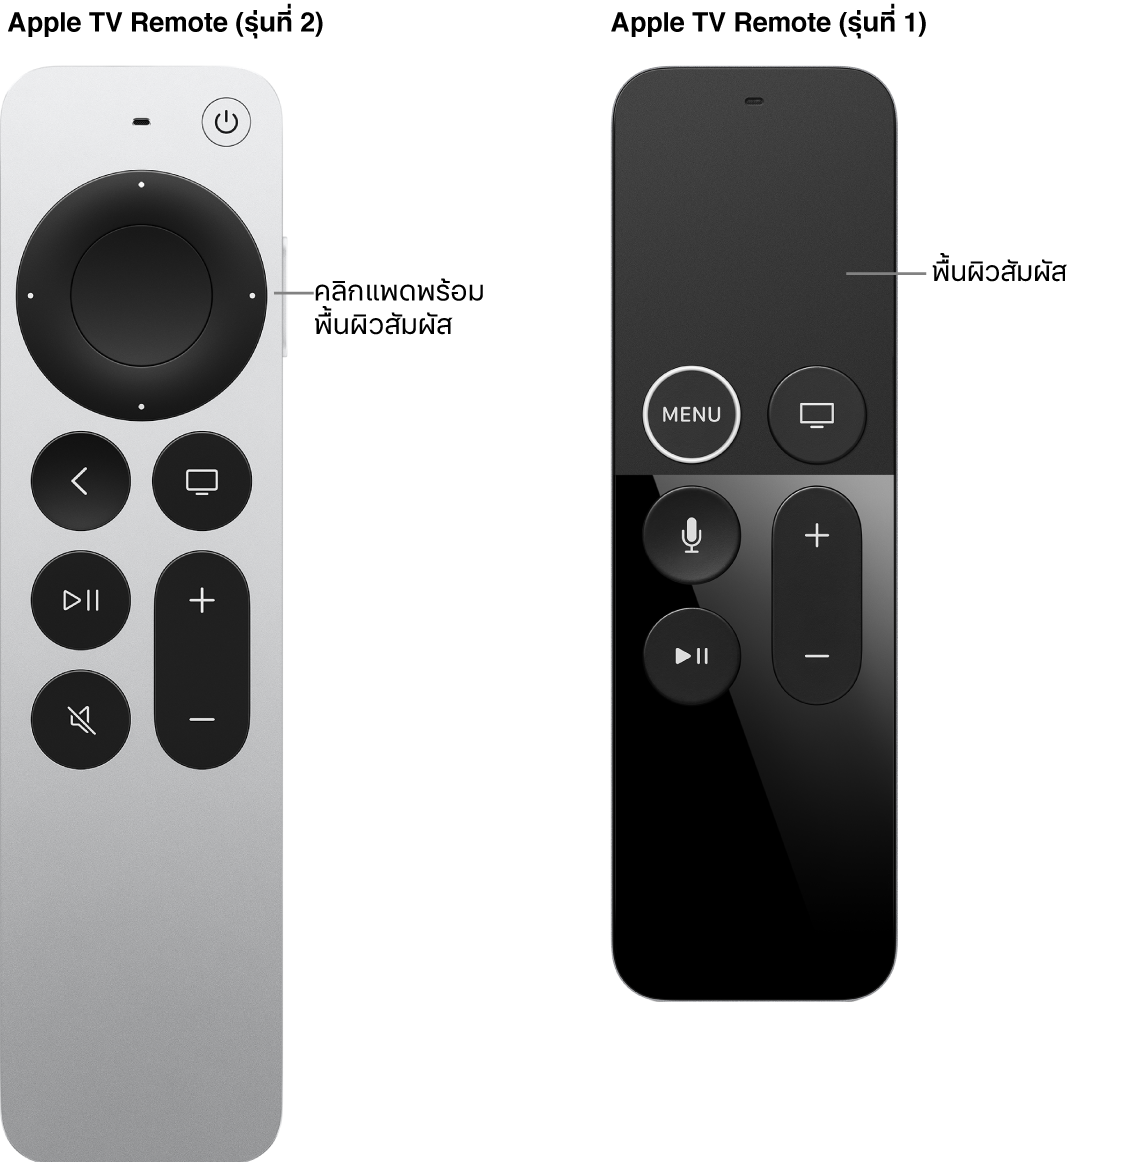 Apple TV Remote (รุ่นที่ 2 และรุ่นที่ 3) ที่มีคลิกแพด และ Apple TV Remote (รุ่นที่ 1) ที่มีพื้นผิวสัมผัส